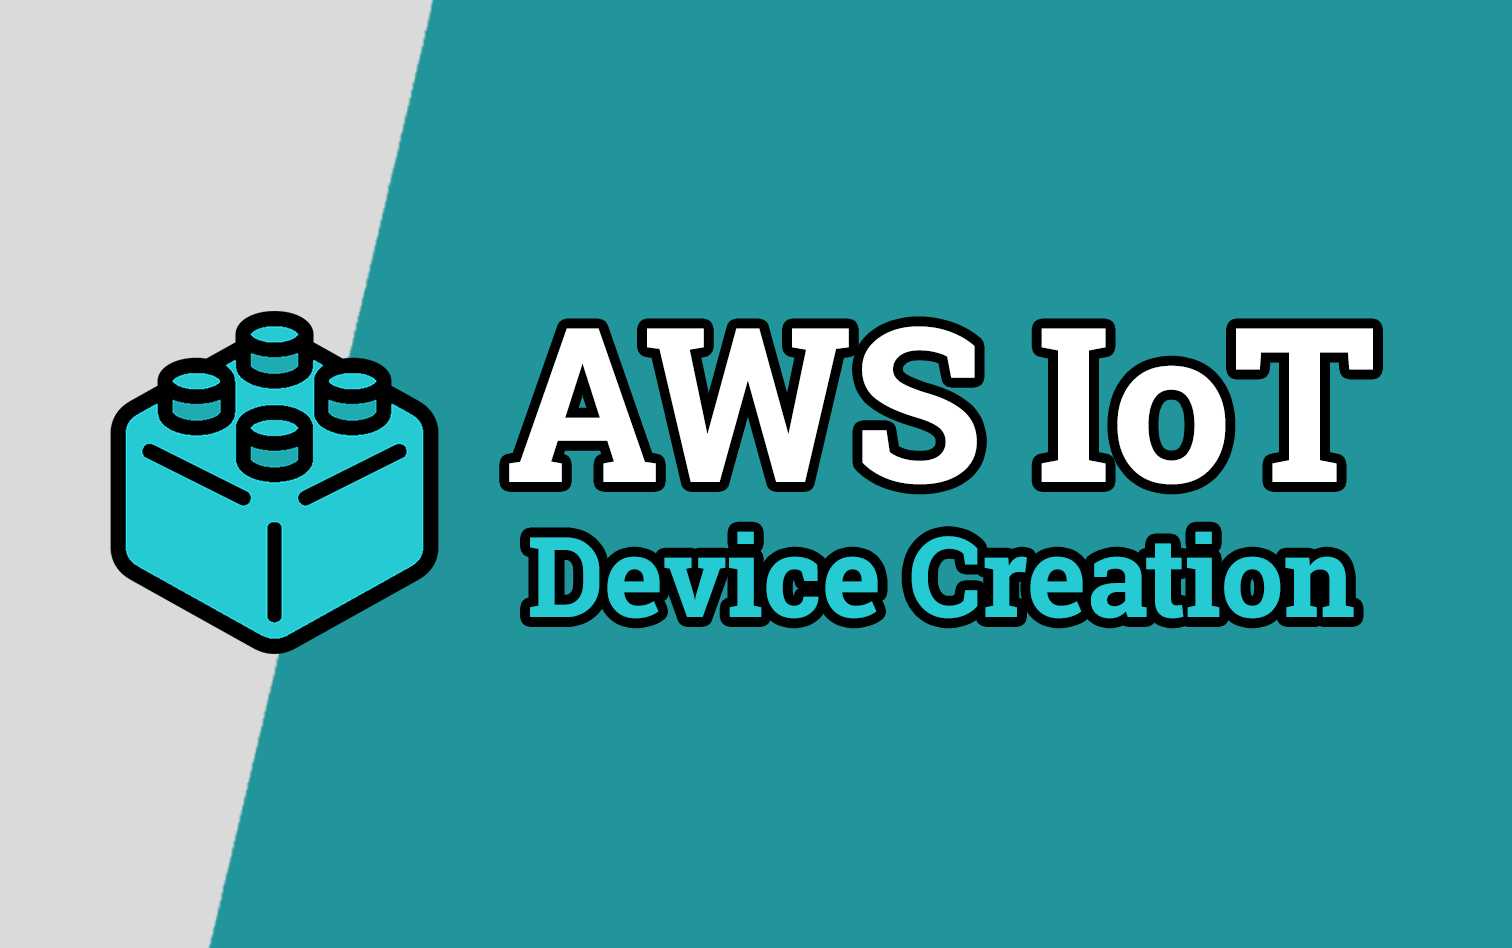 AWS IoT - Device Creation